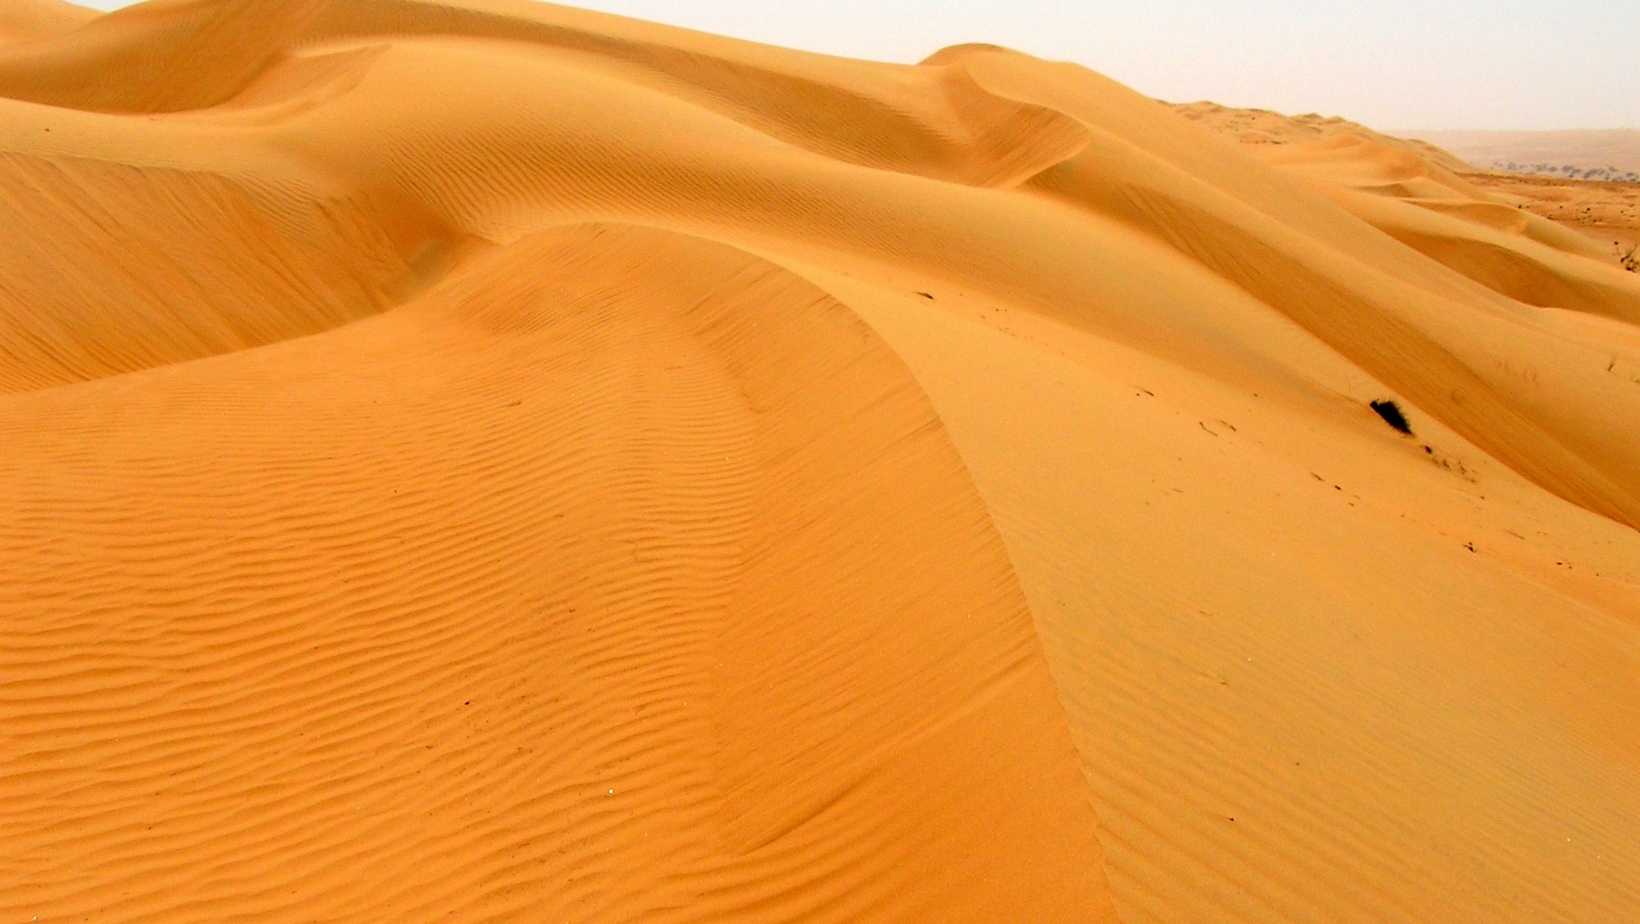 Ramlat al-Wahiba (Oman): deserto, dune, diversa geologia, flora, fauna